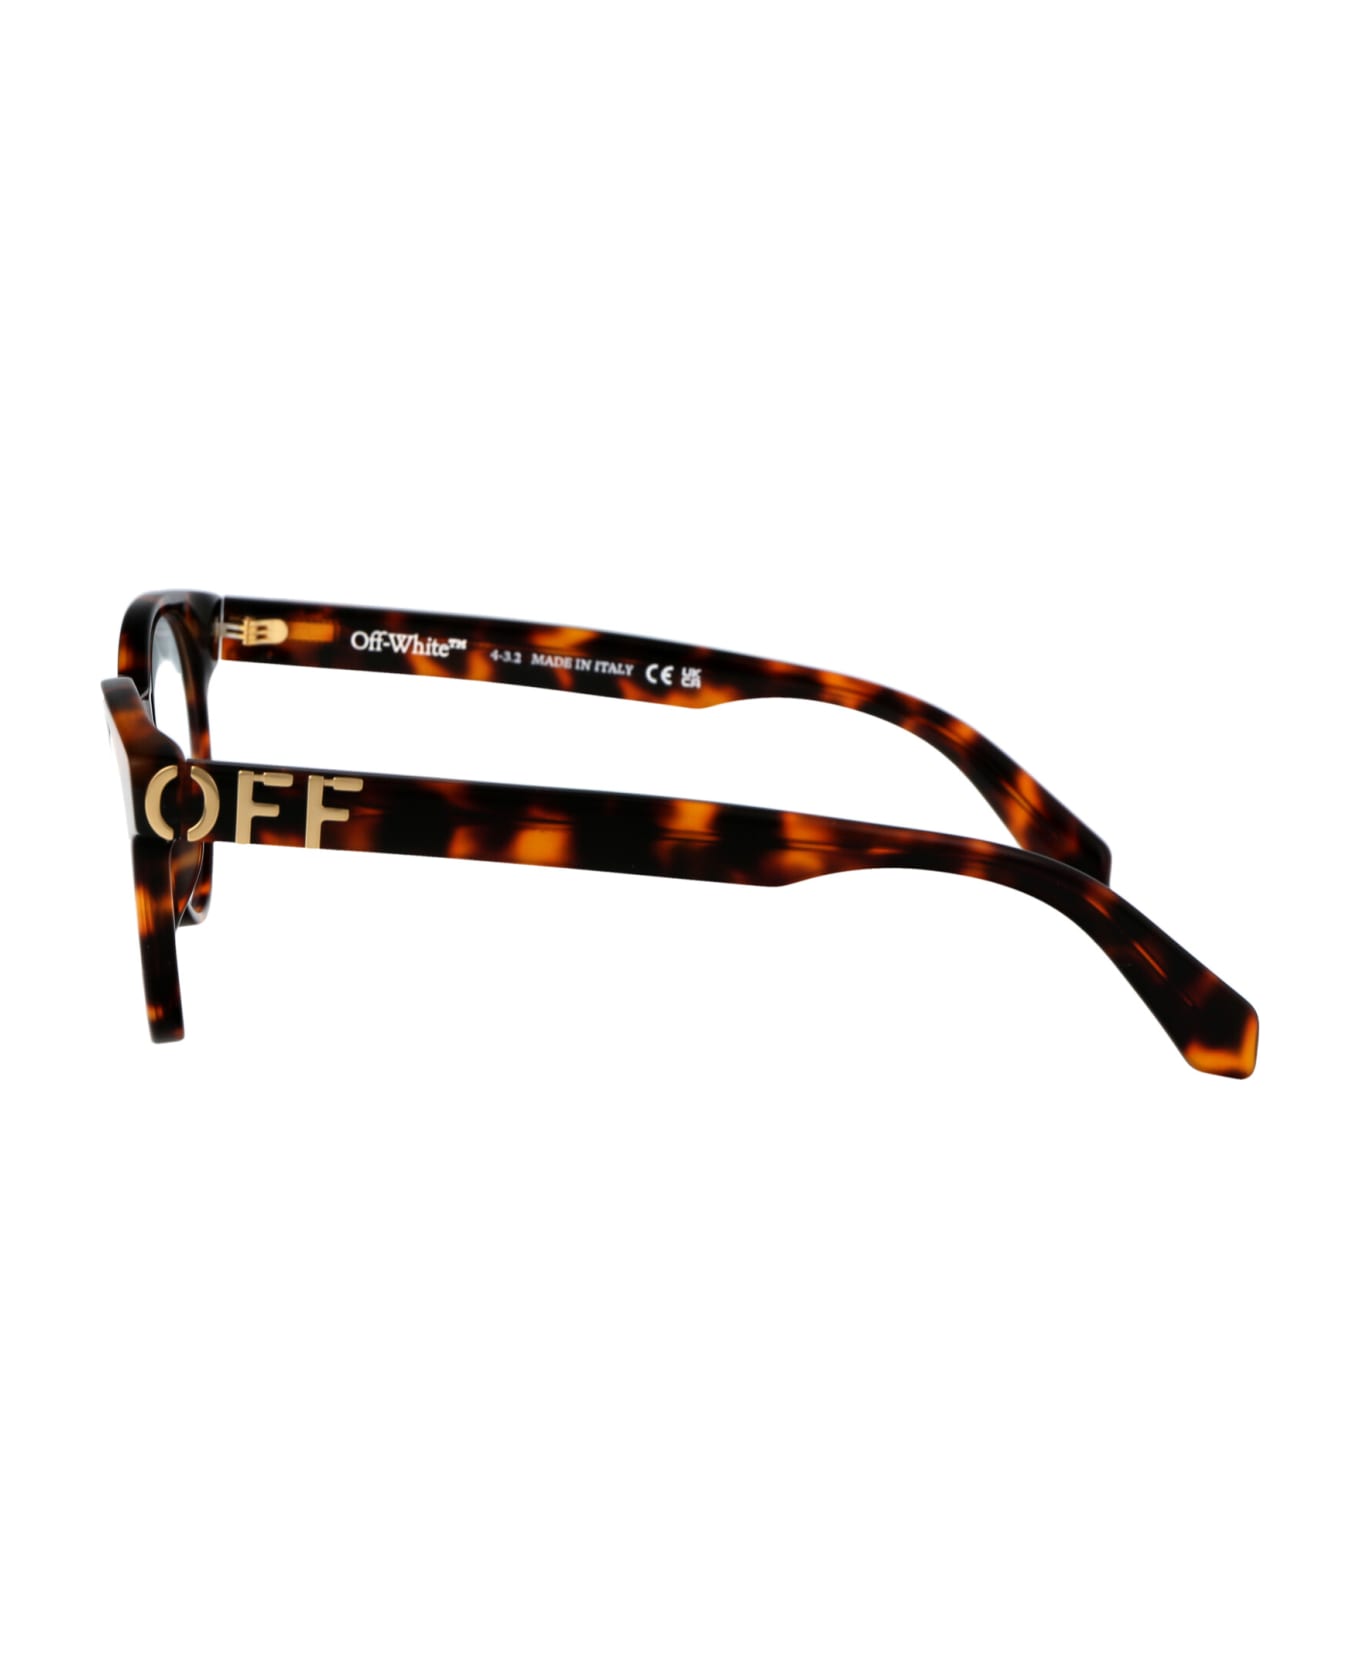 Off-White Optical Style 68 Glasses - 6000 HAVANA